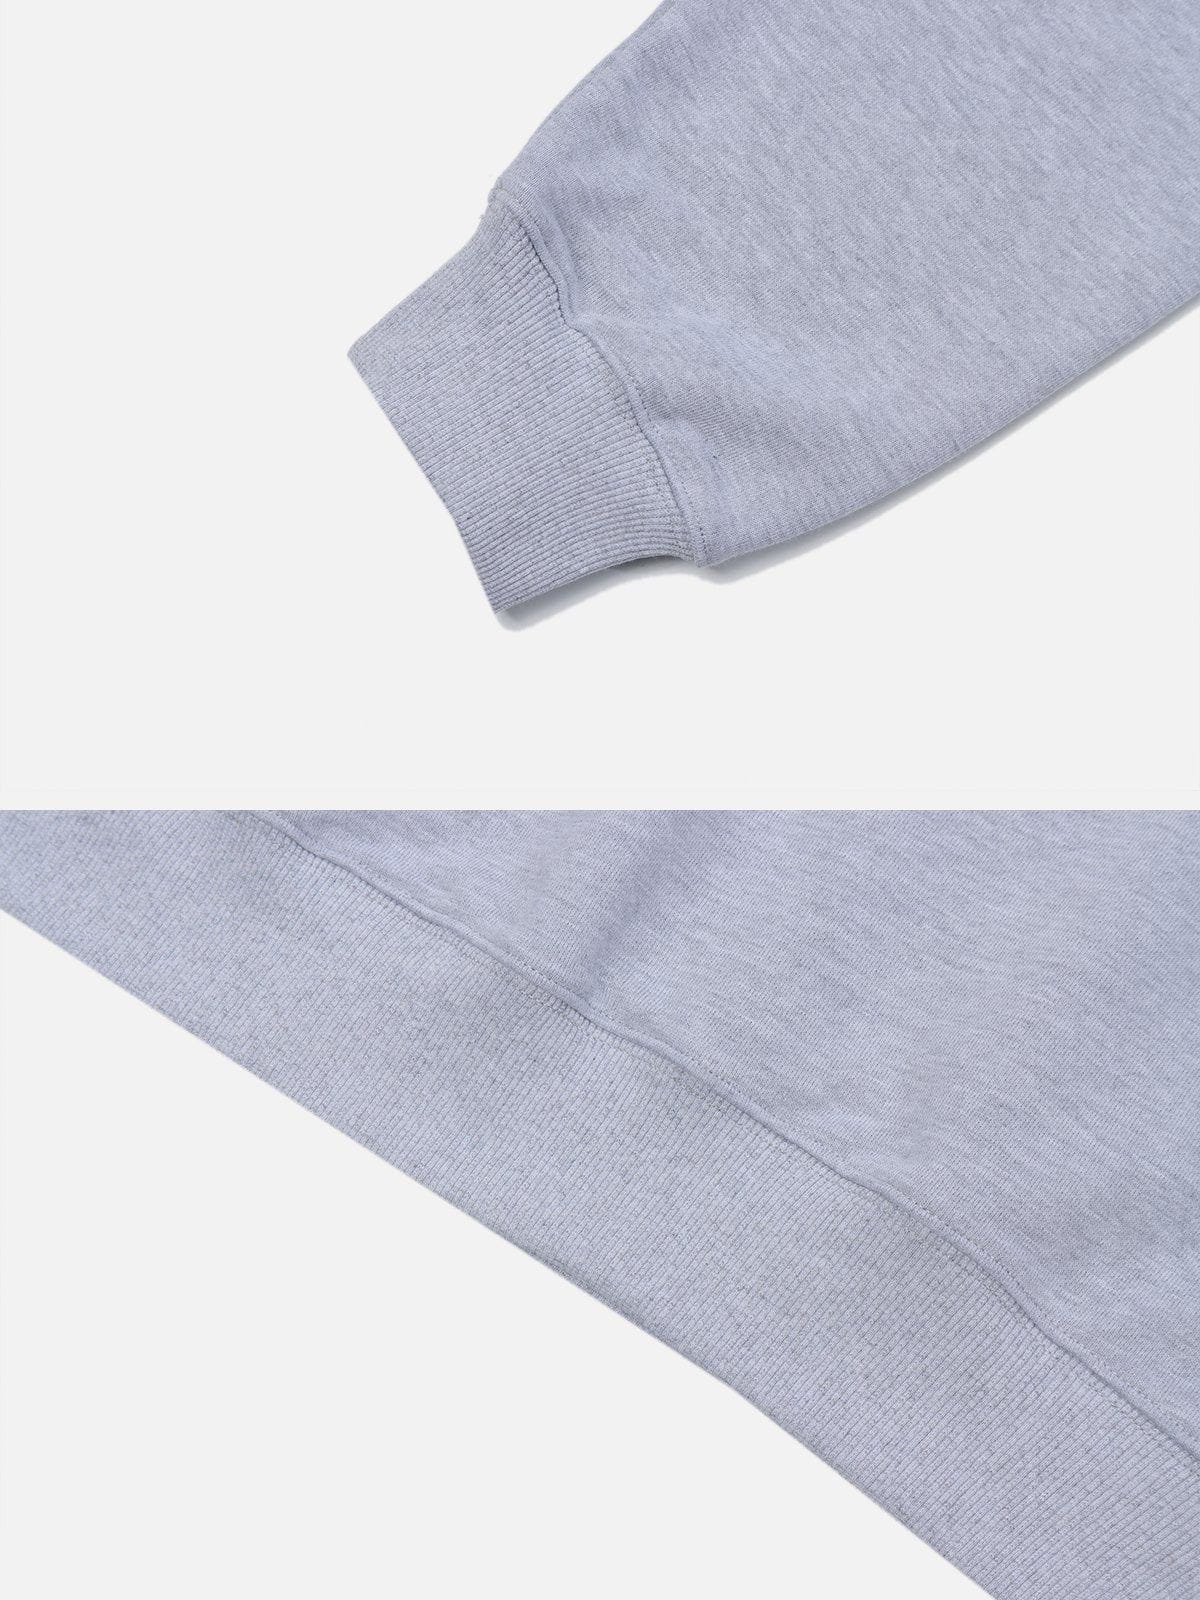 Majesda® - Shadow Letters Print Sweatshirt outfit ideas streetwear fashion